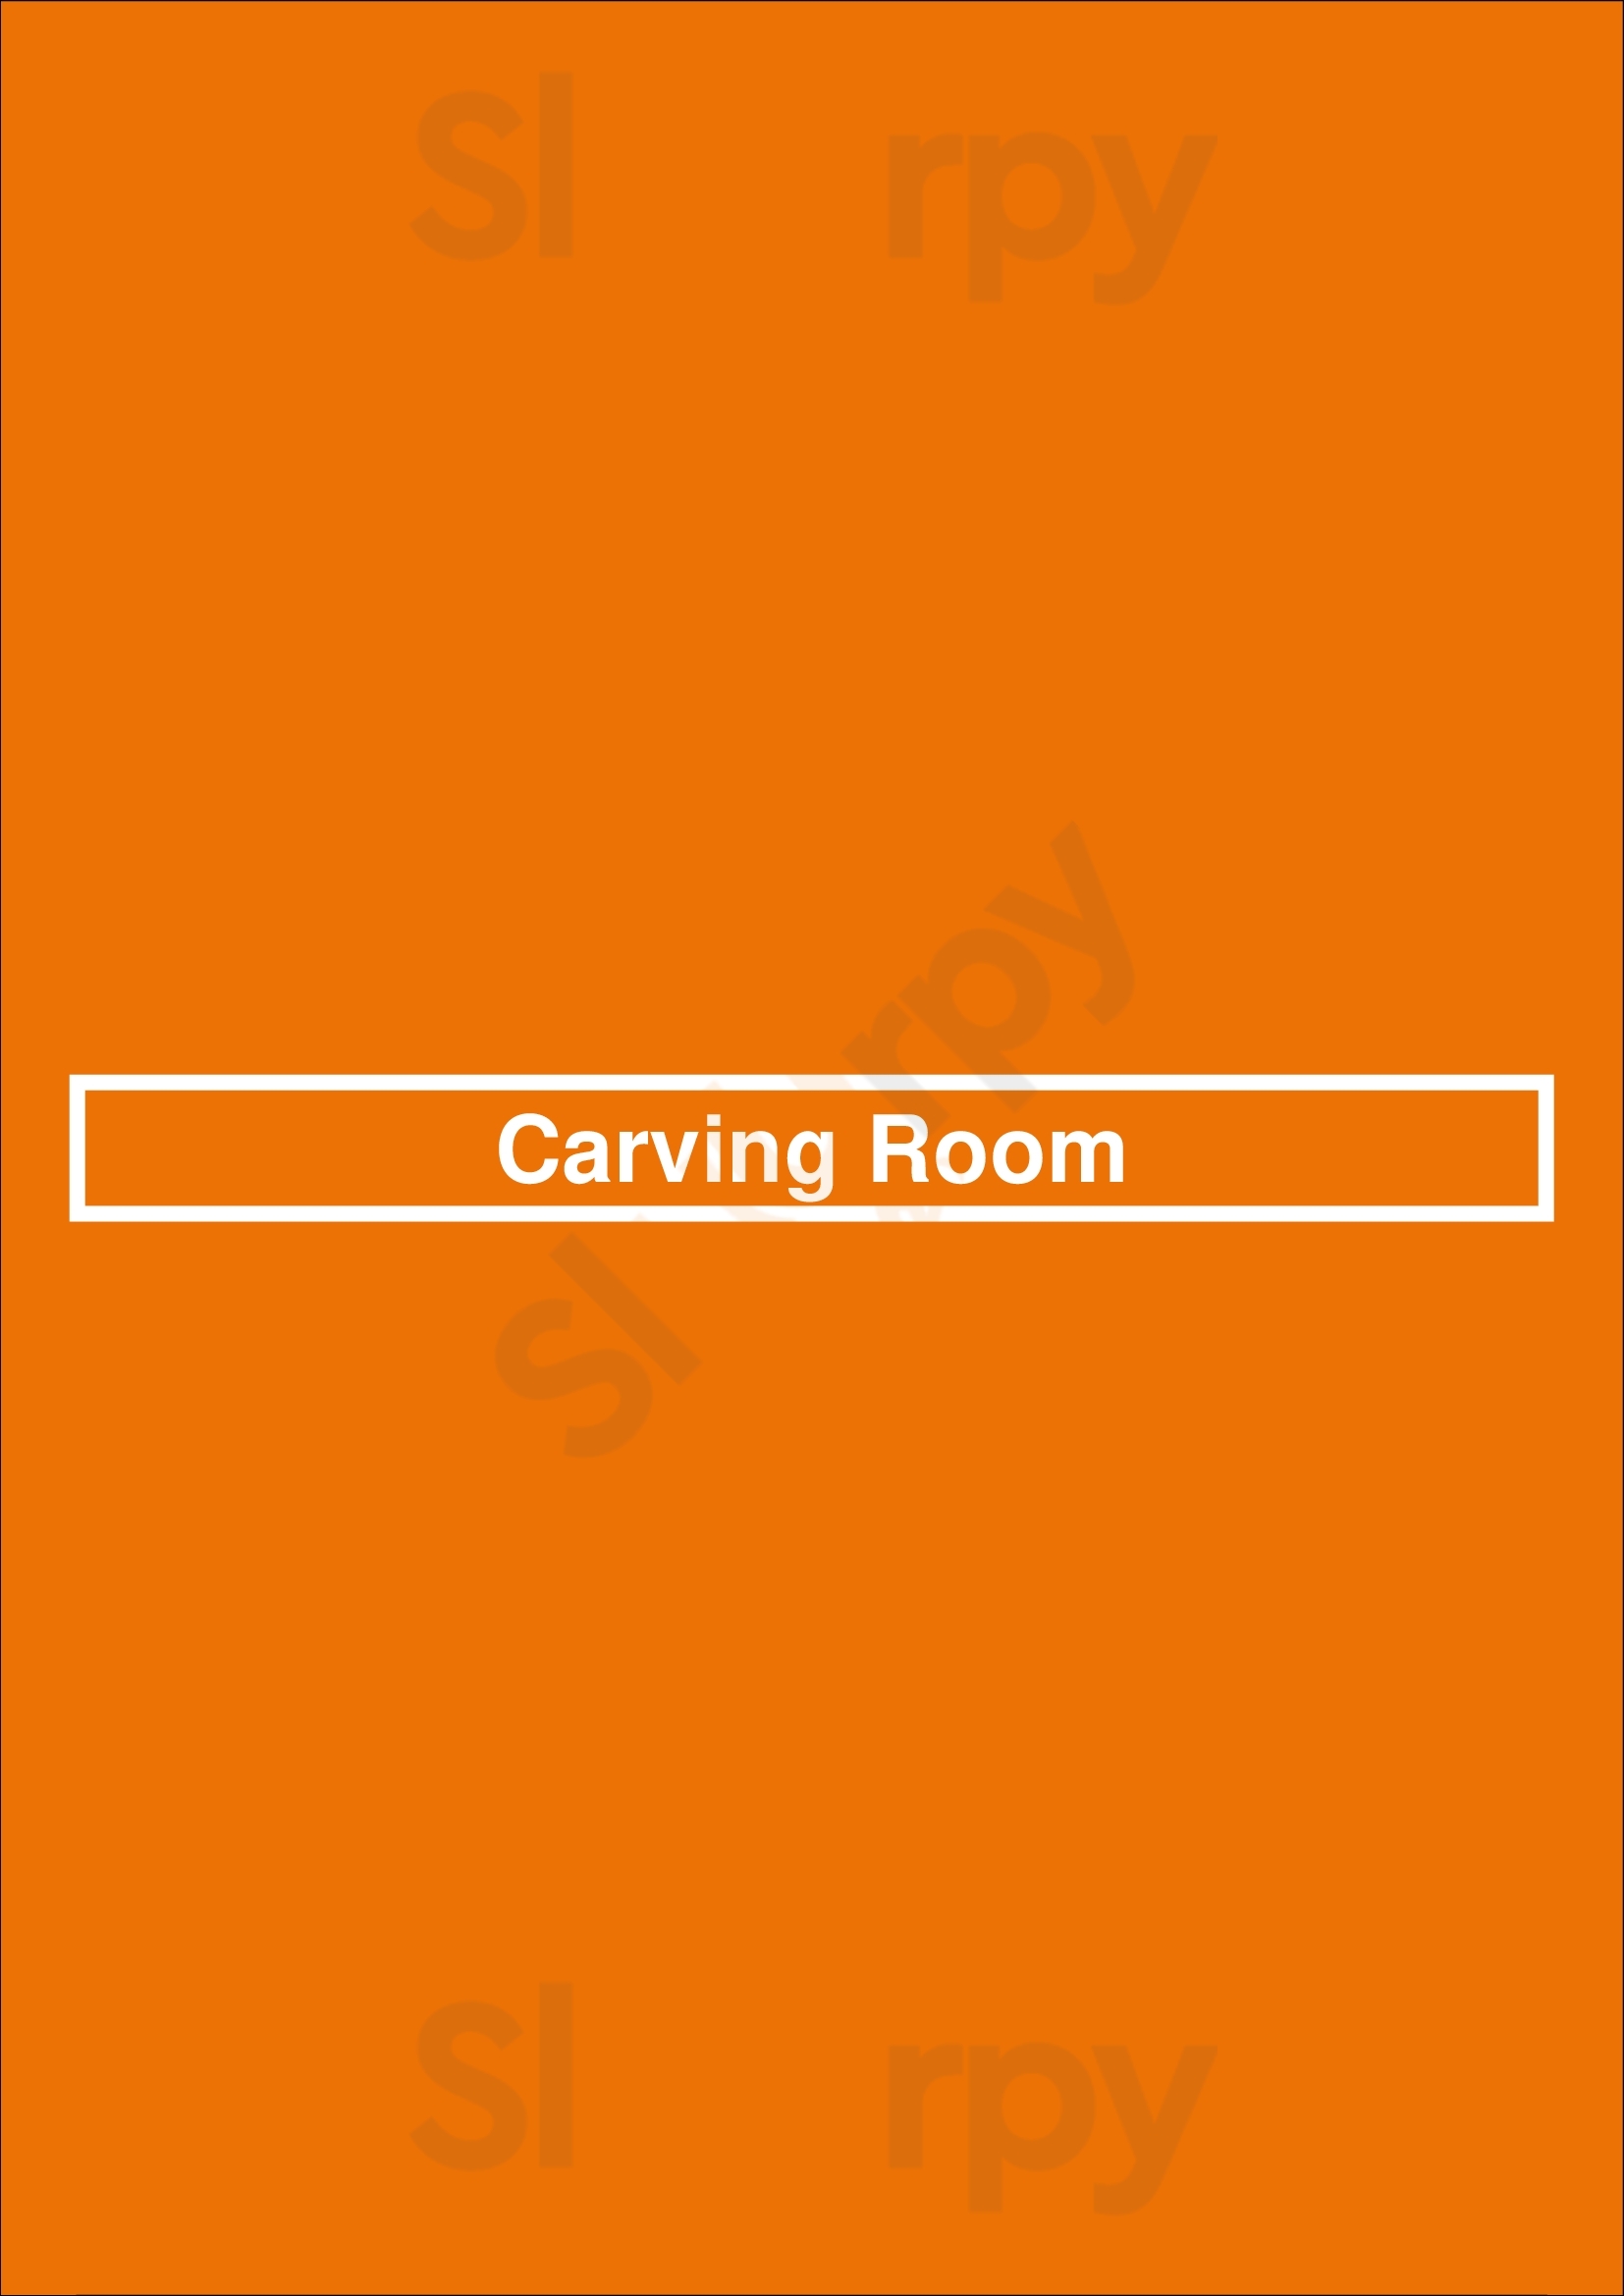 Carving Room Washington DC Menu - 1